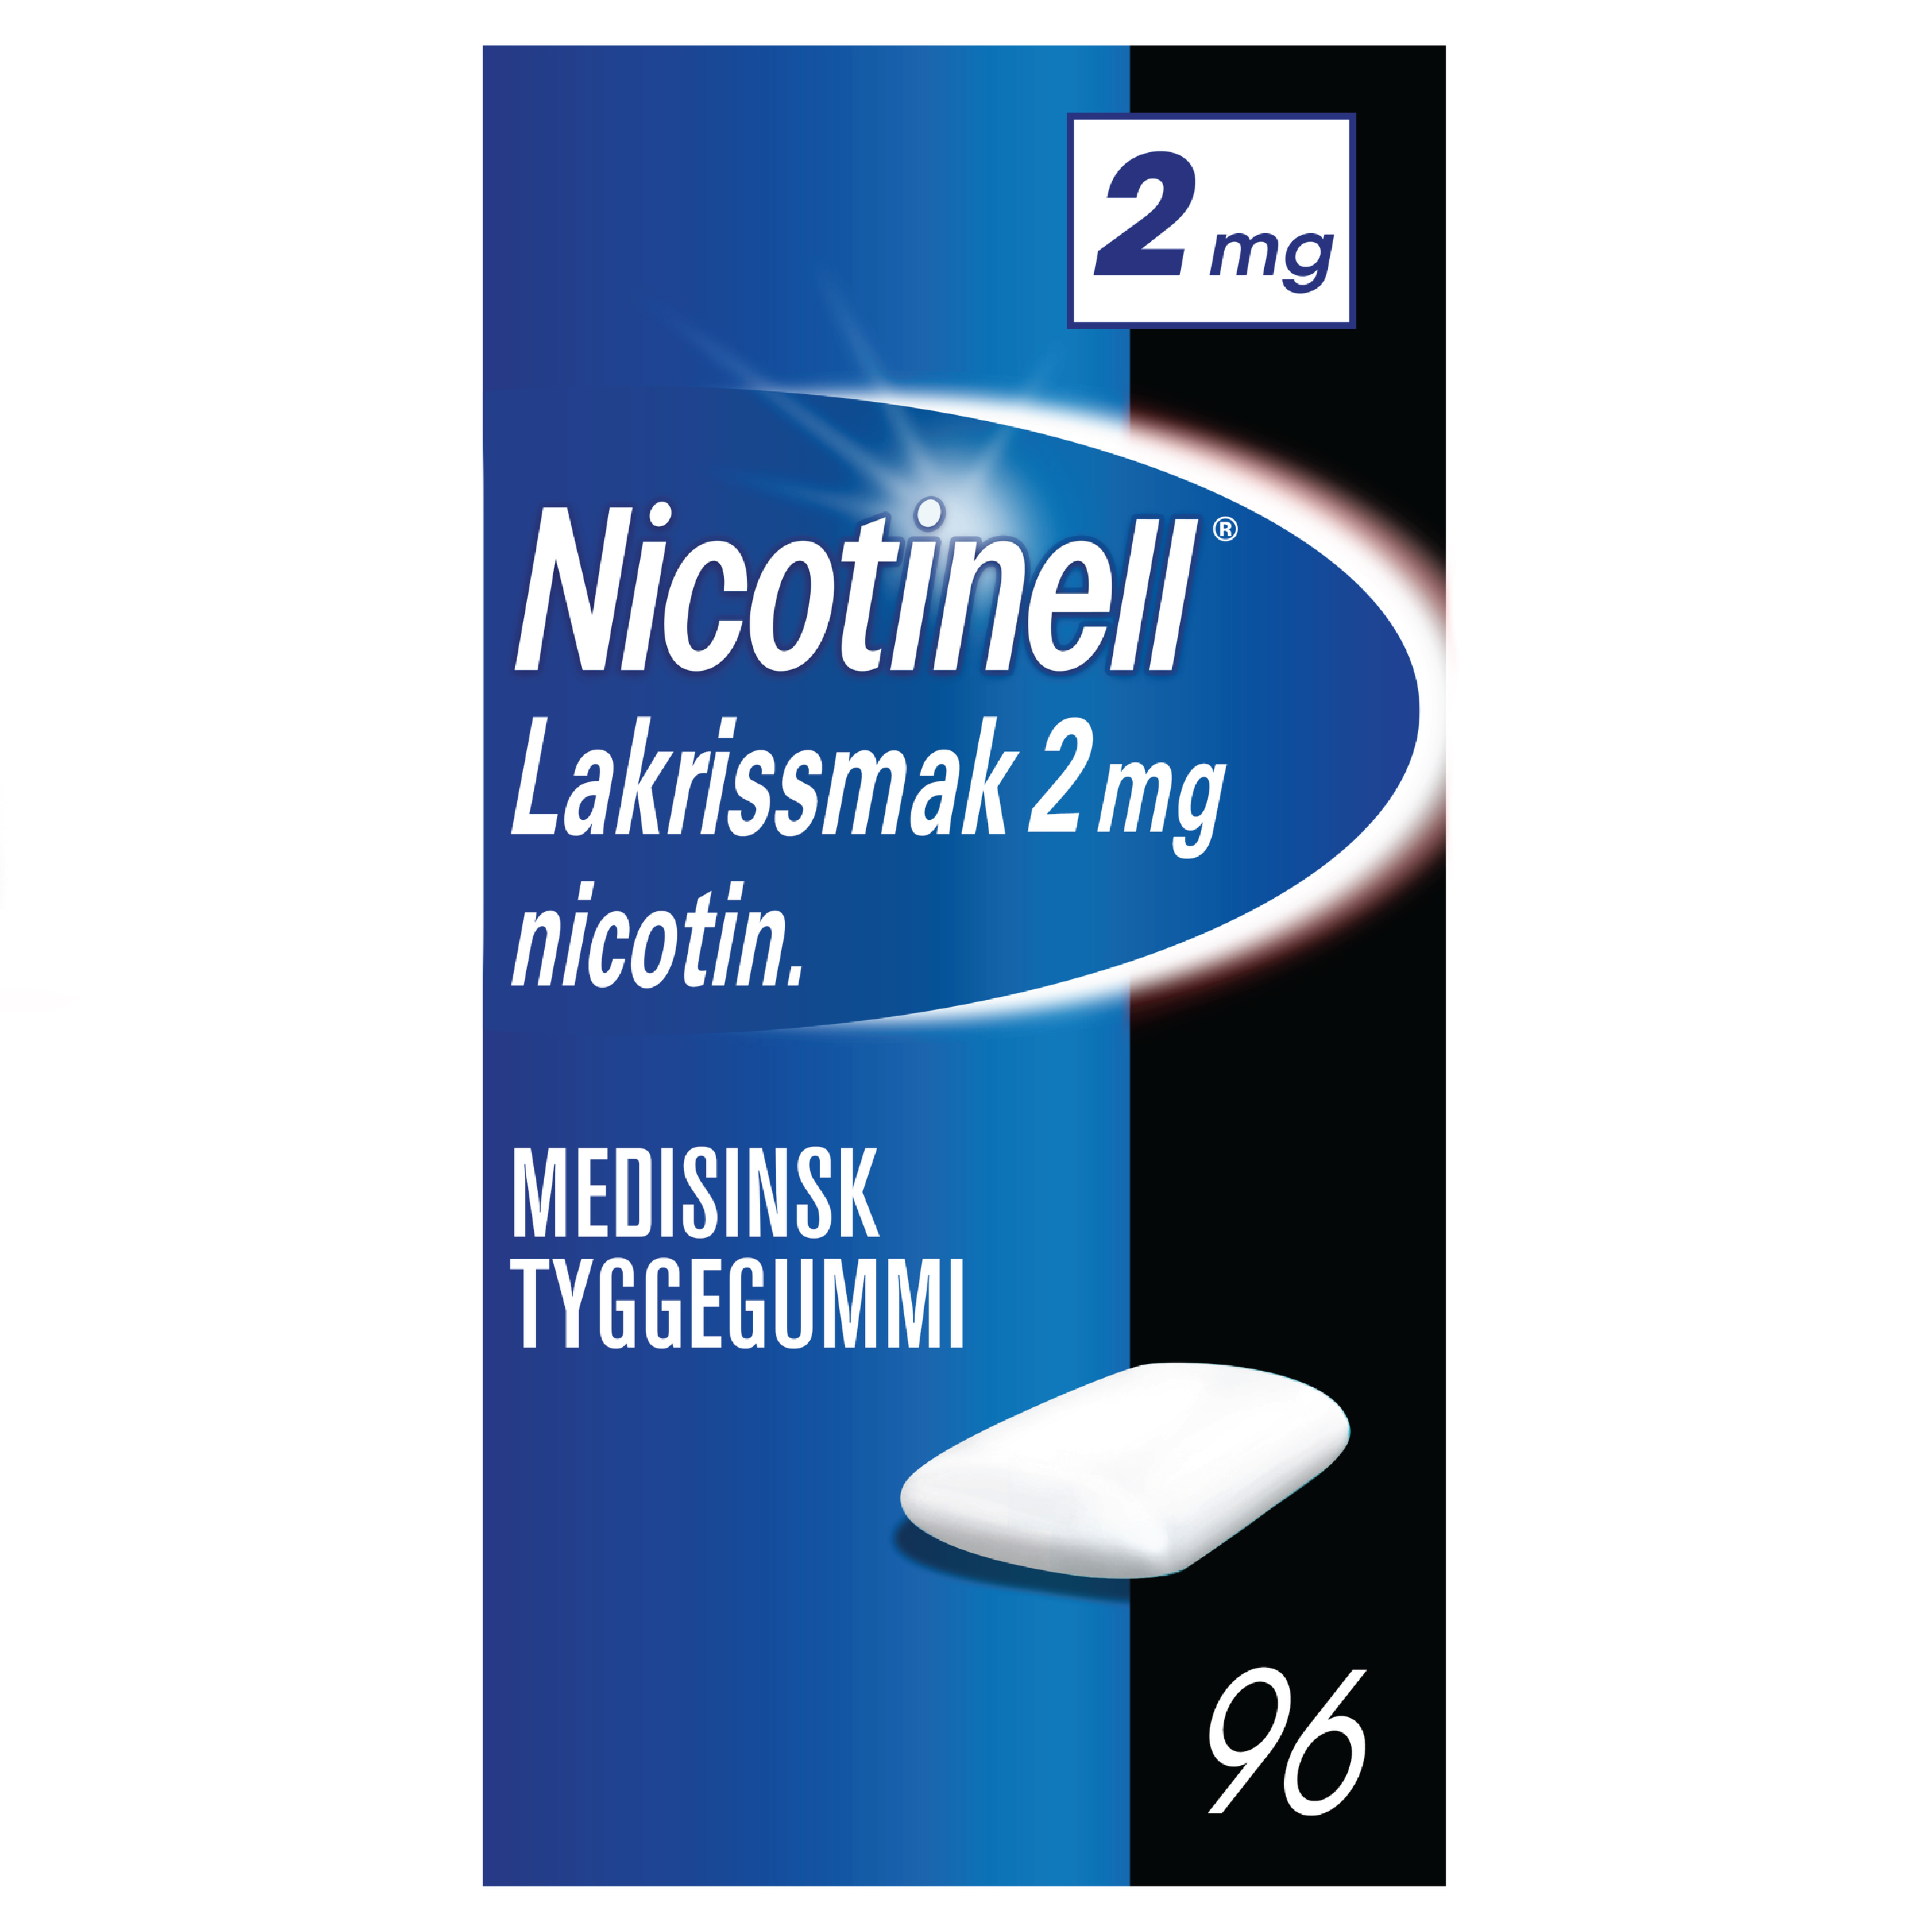 Nicotinell Tyggegummi 2mg lakris, Slutte å røyke,  96 stk.